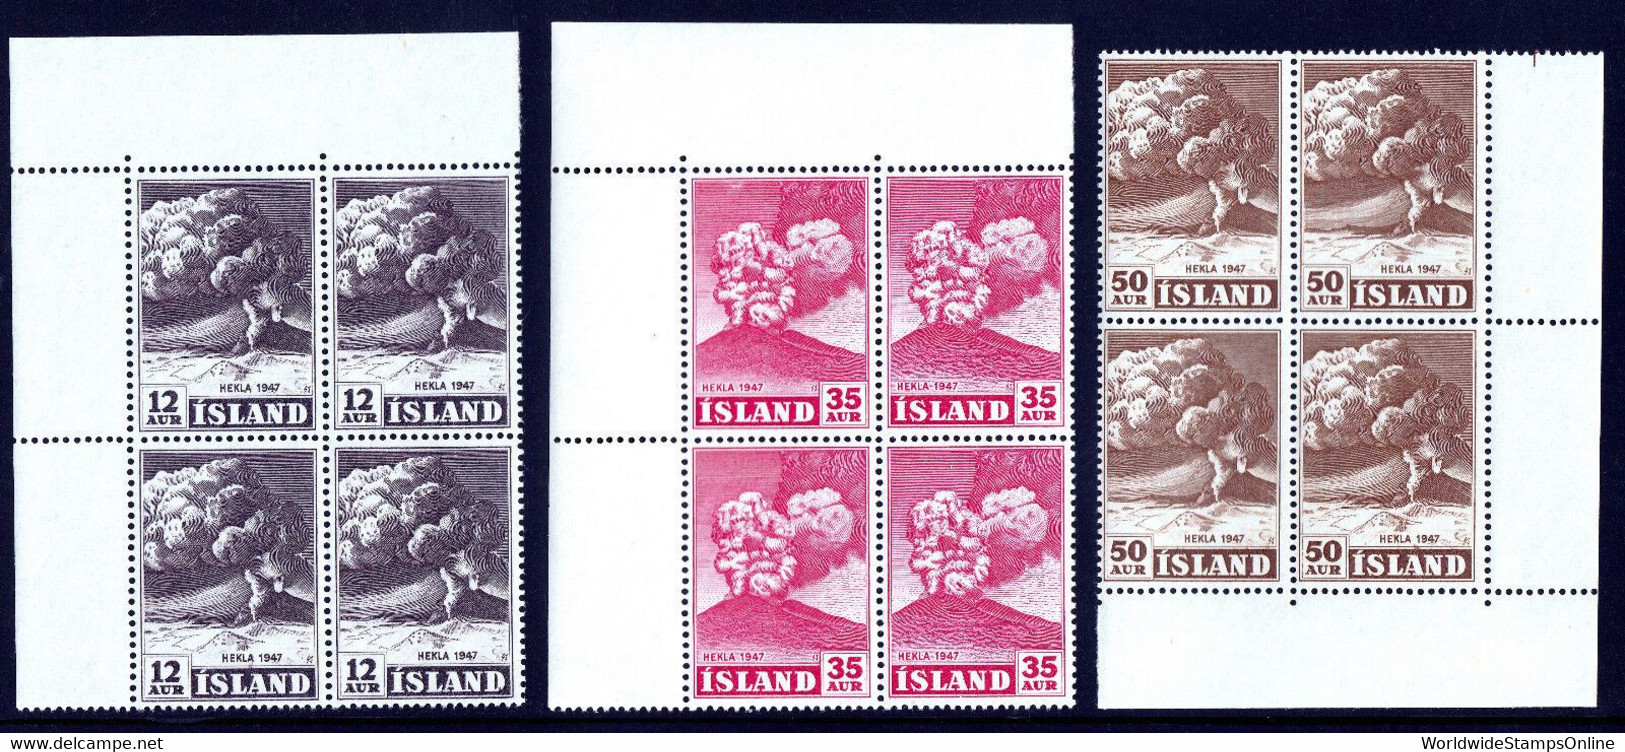 ICELAND — SCOTT 246-252 — 1948 HEKLA ERUPTION SET — MNH BLOCKS/4 — 2 SCANS — SCV $397 - Nuevos